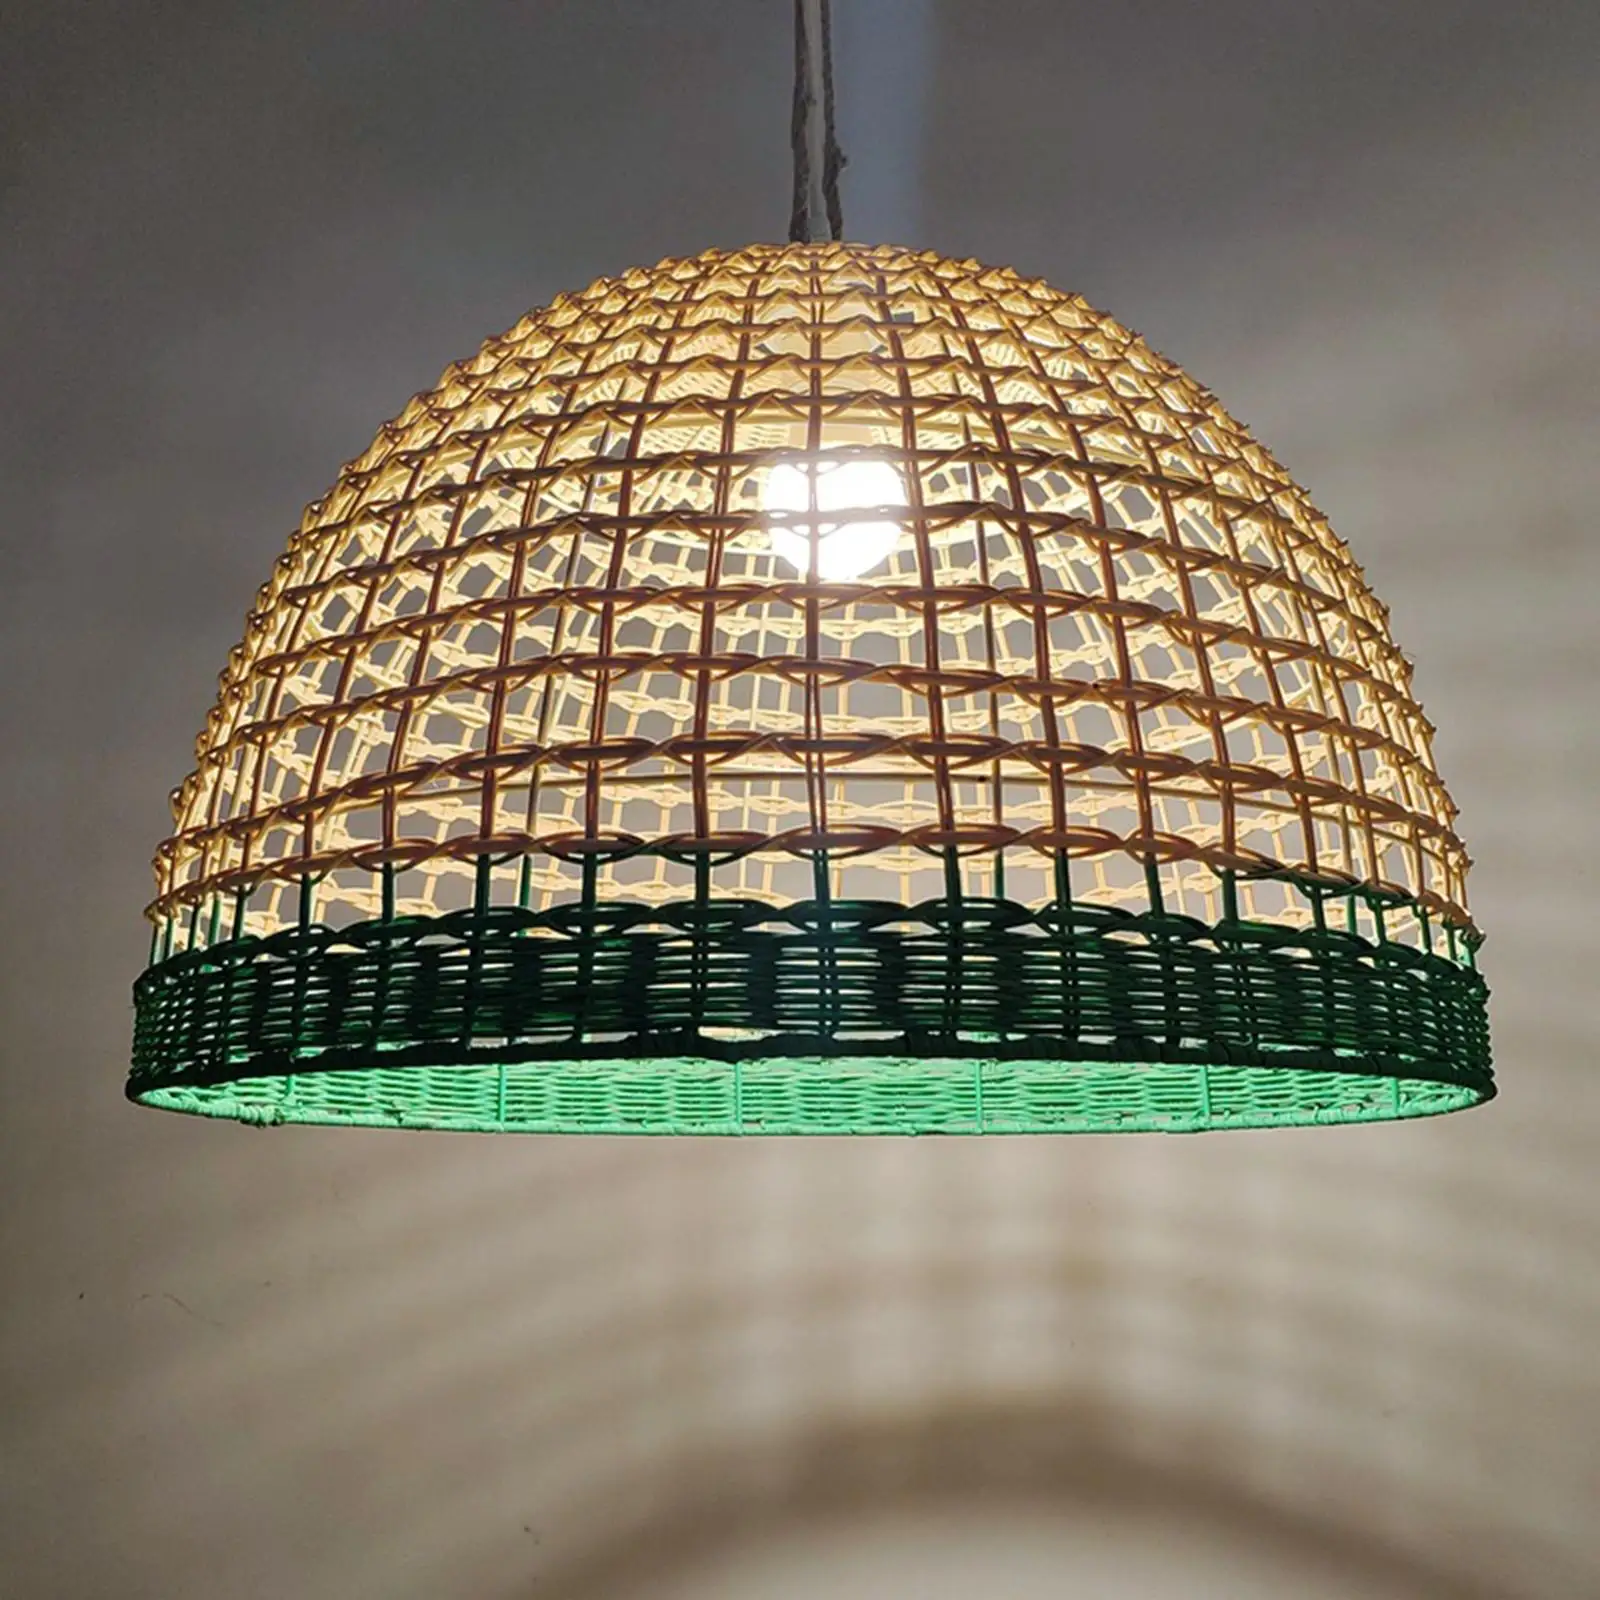 Hanging Pendant Light Cover Hallway Cafe Droplight Handwoven Lamp Shade